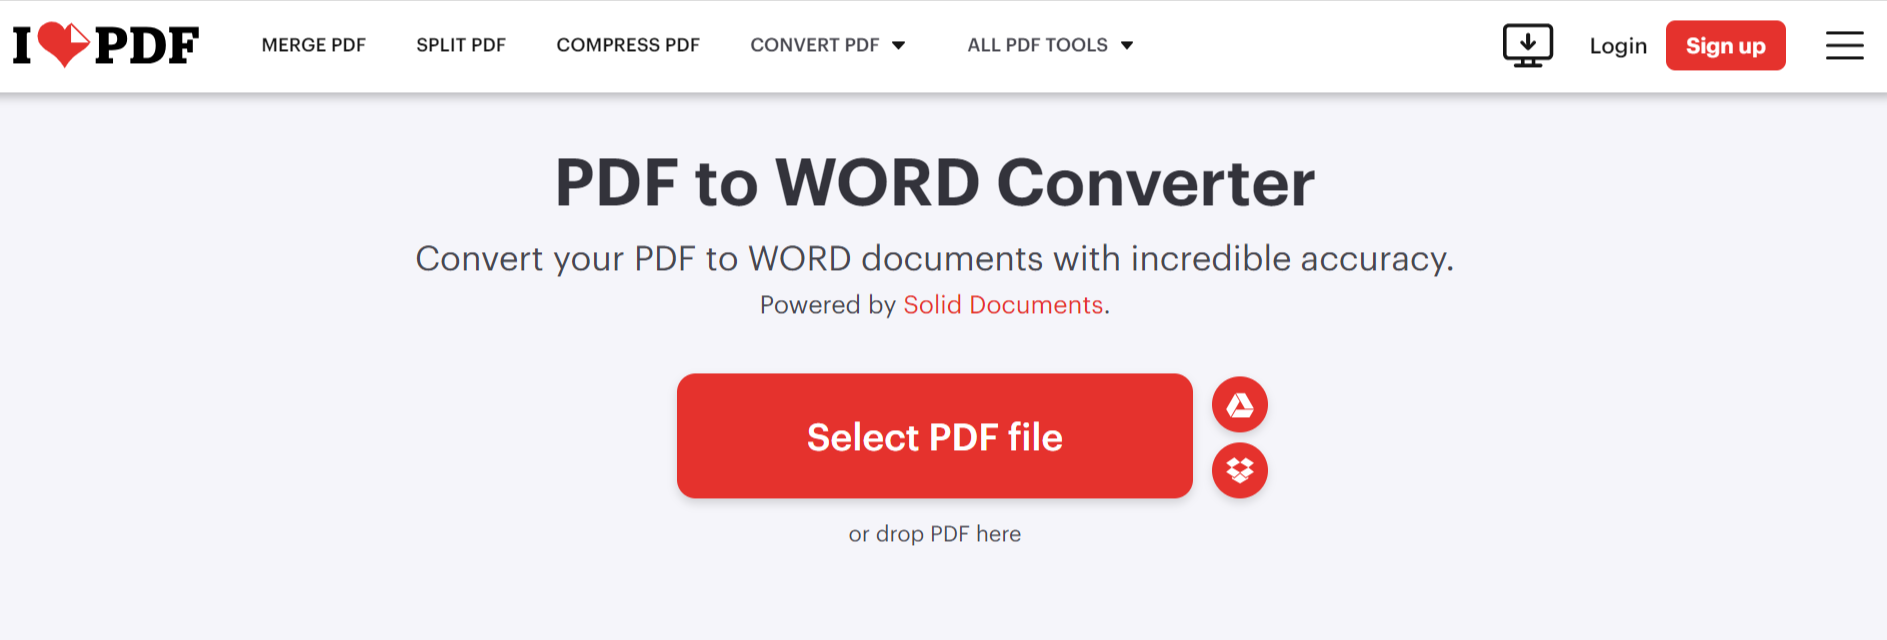 iLovePDF PDF to WORD Converter